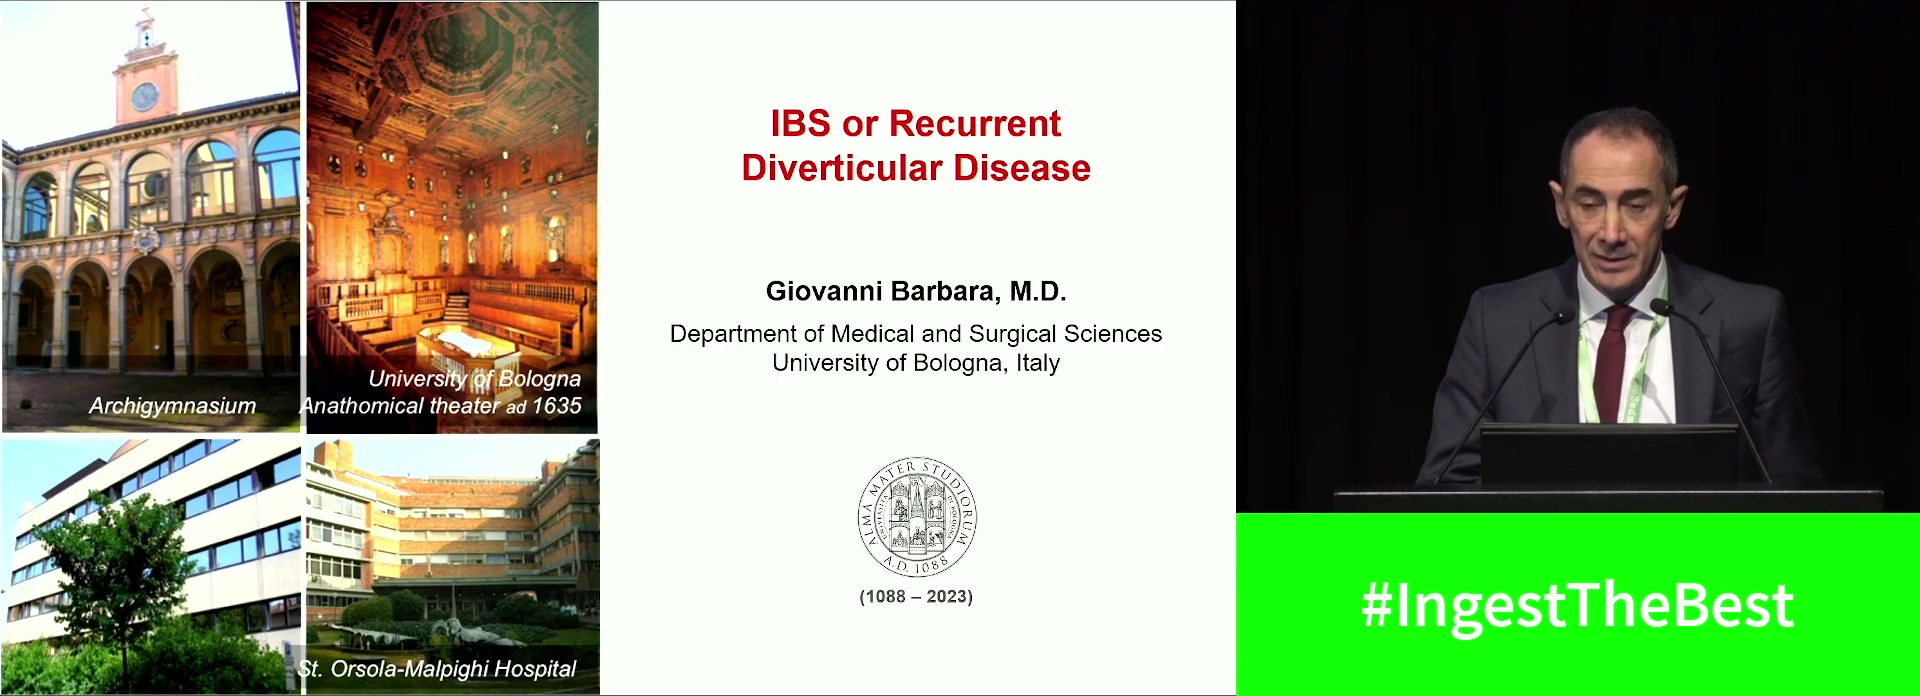 IBS or recurrent diverticular disease